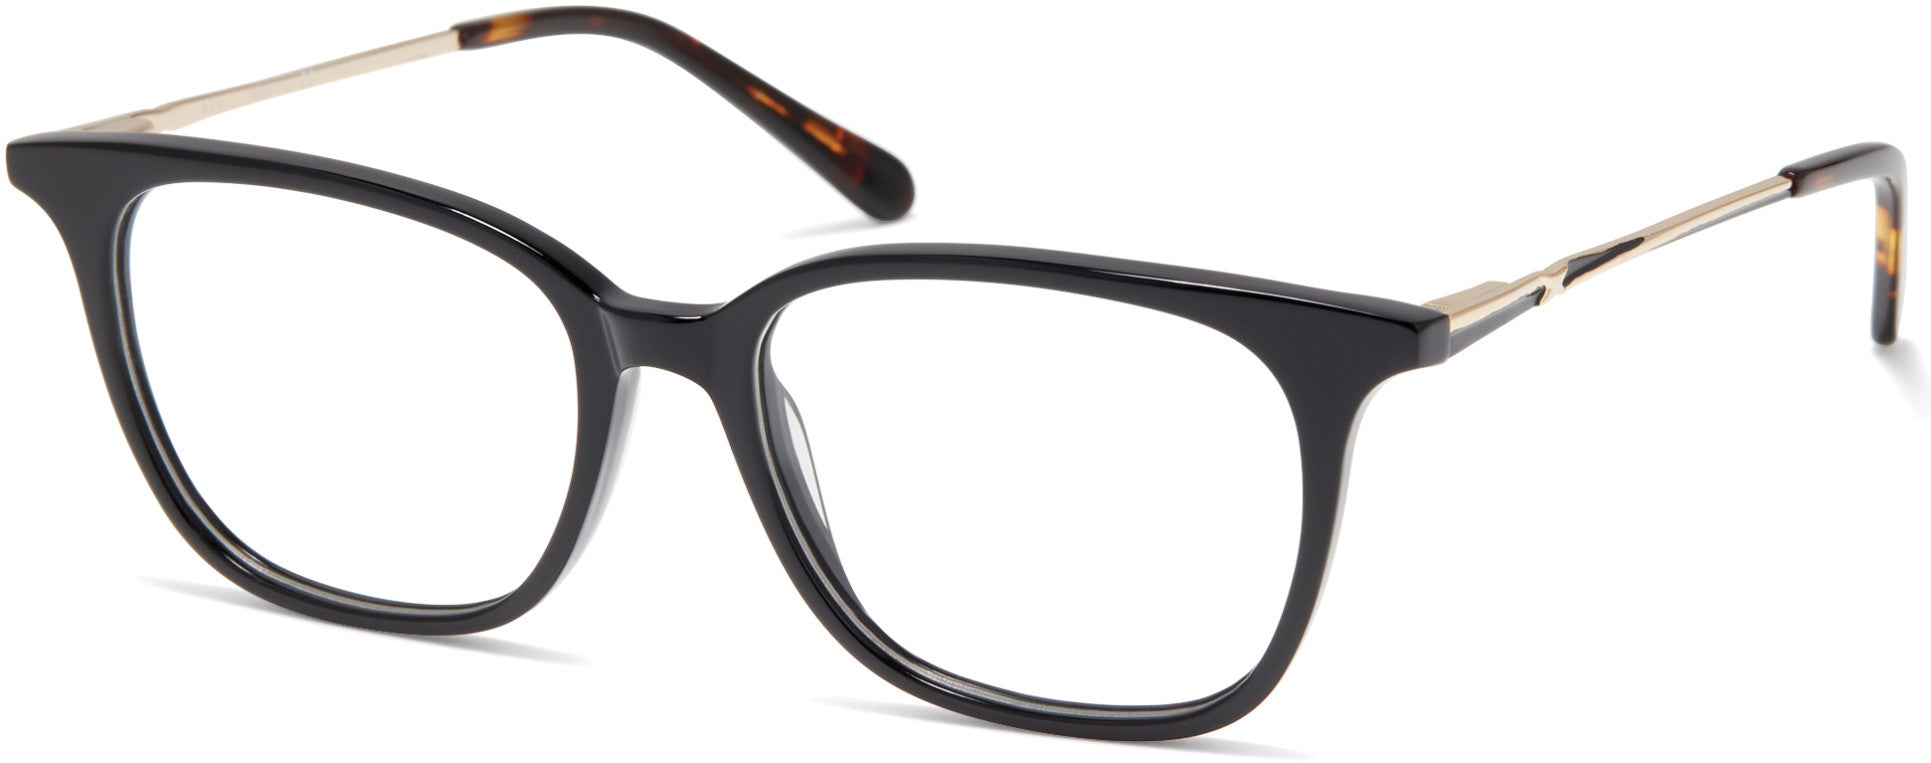 Viva VV4522 Square Eyeglasses 001-001 - Shiny Black